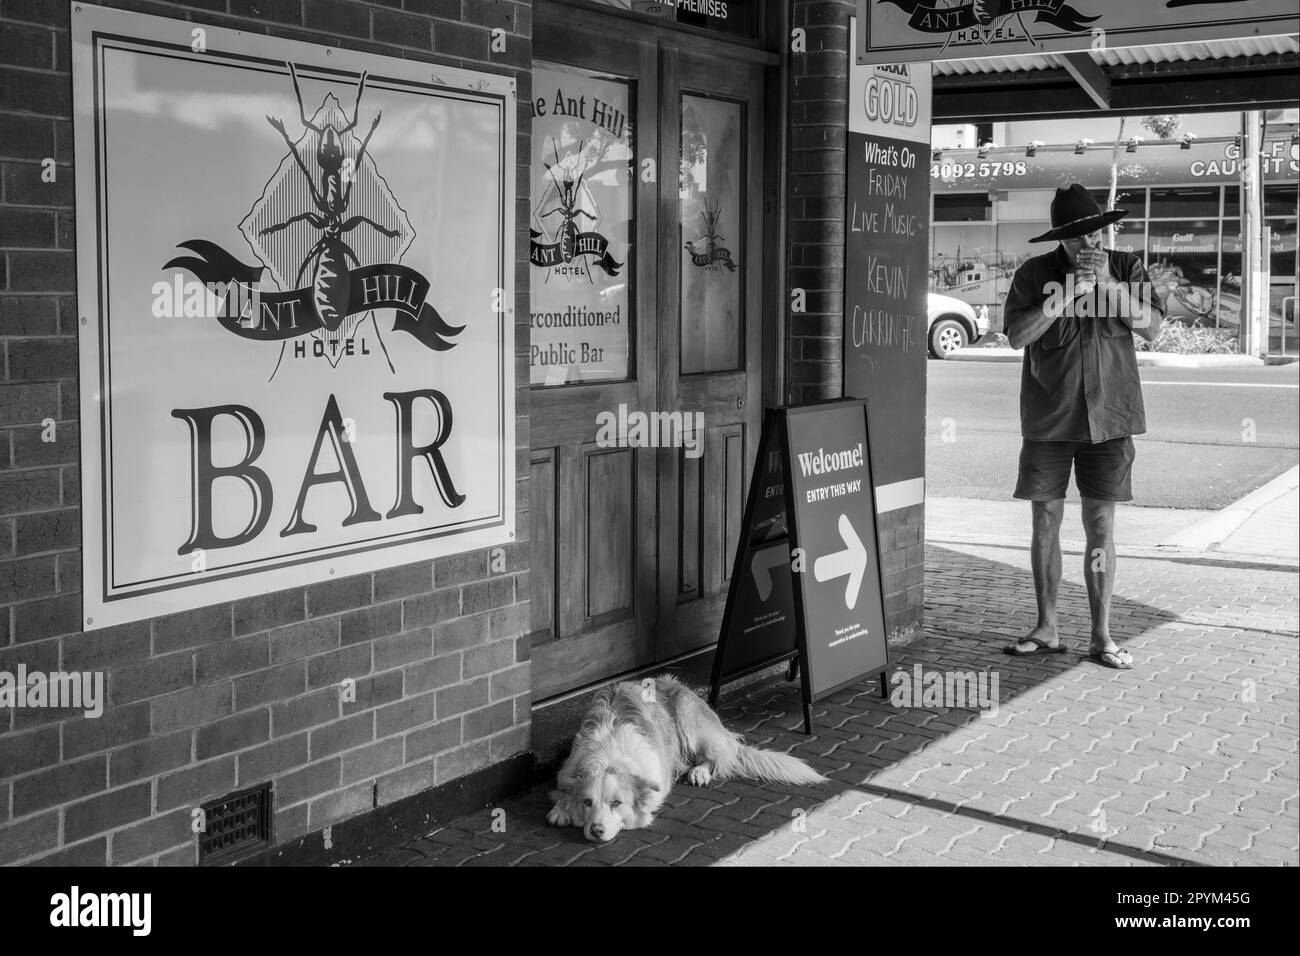 A sleepy dog and a man lighting a cigarette on a street corner in Mareeba, Queensland, Australia Stock Photo